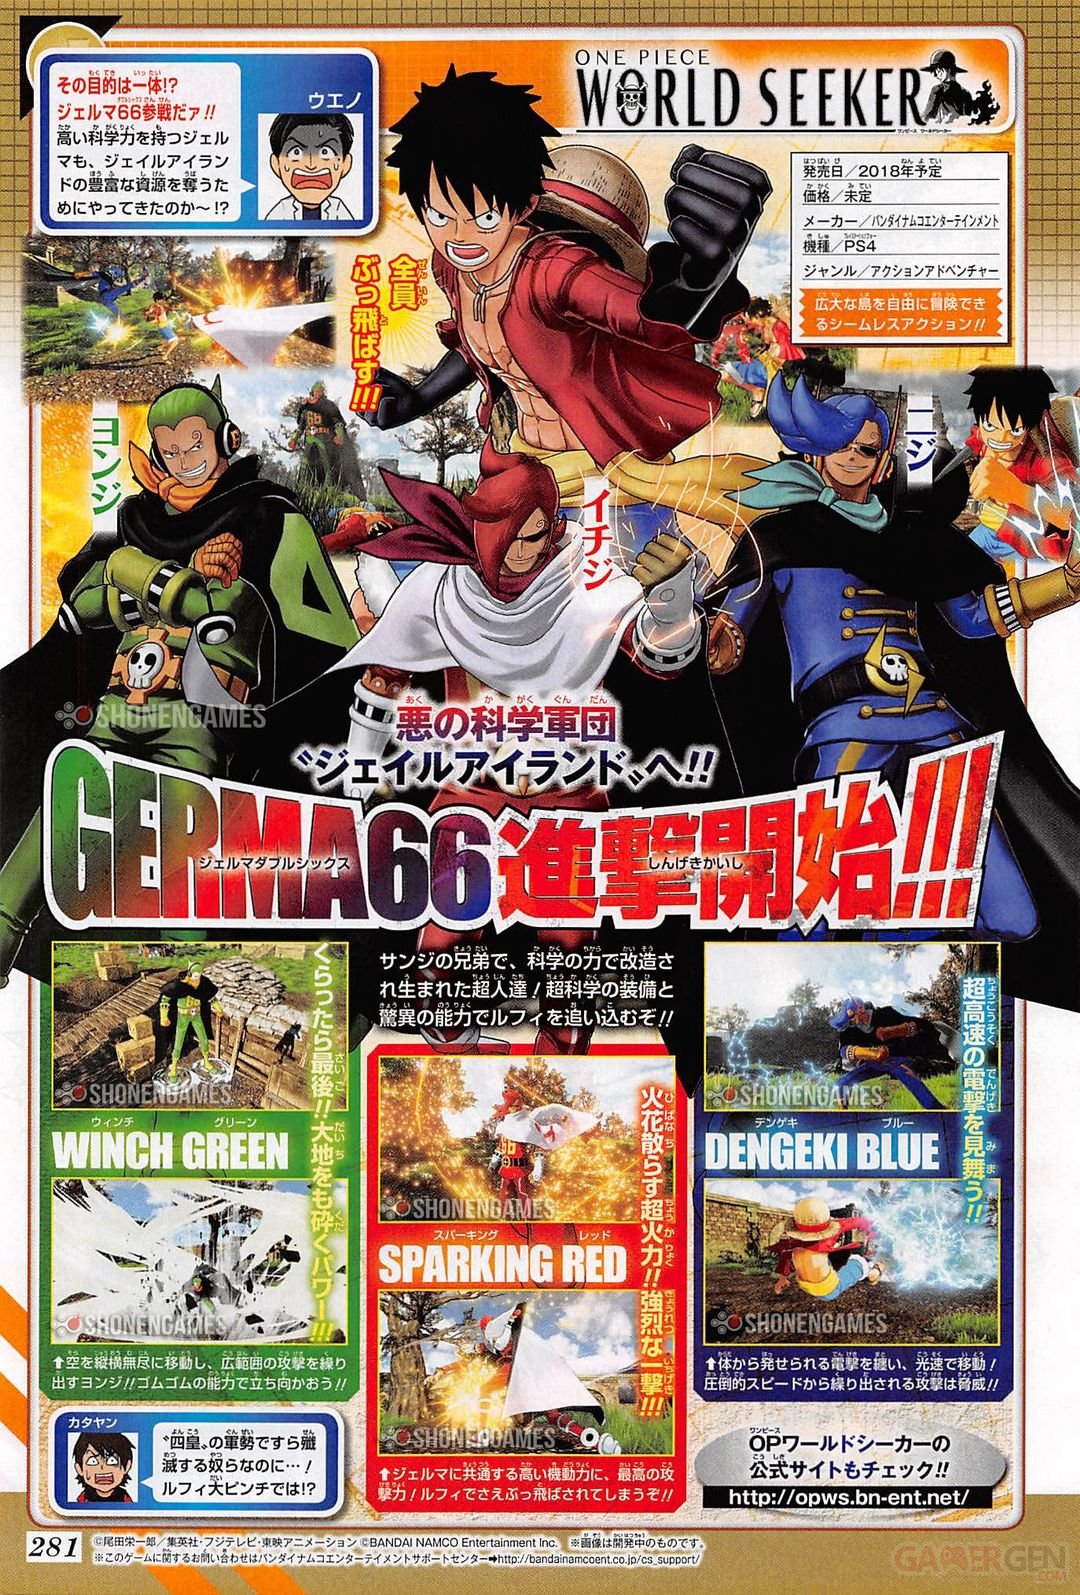 One Piece World Seeker Les Membres De La Germa 66 Entrent En Scene Gamergen Com